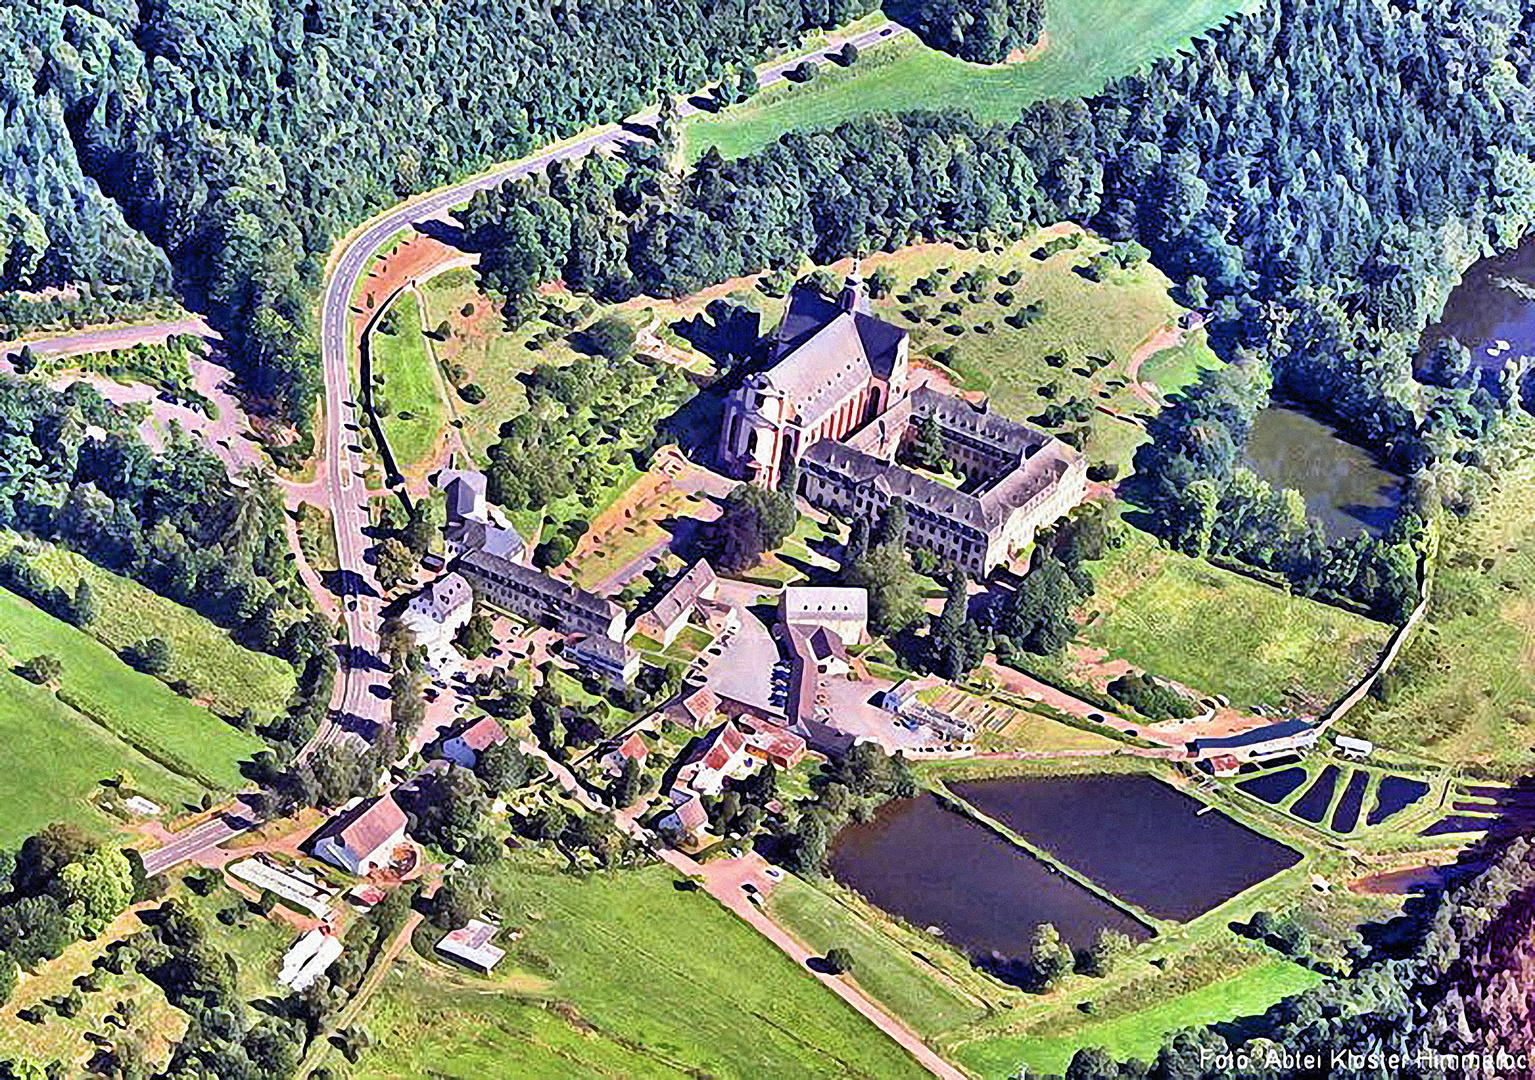 Kloster Himmerod